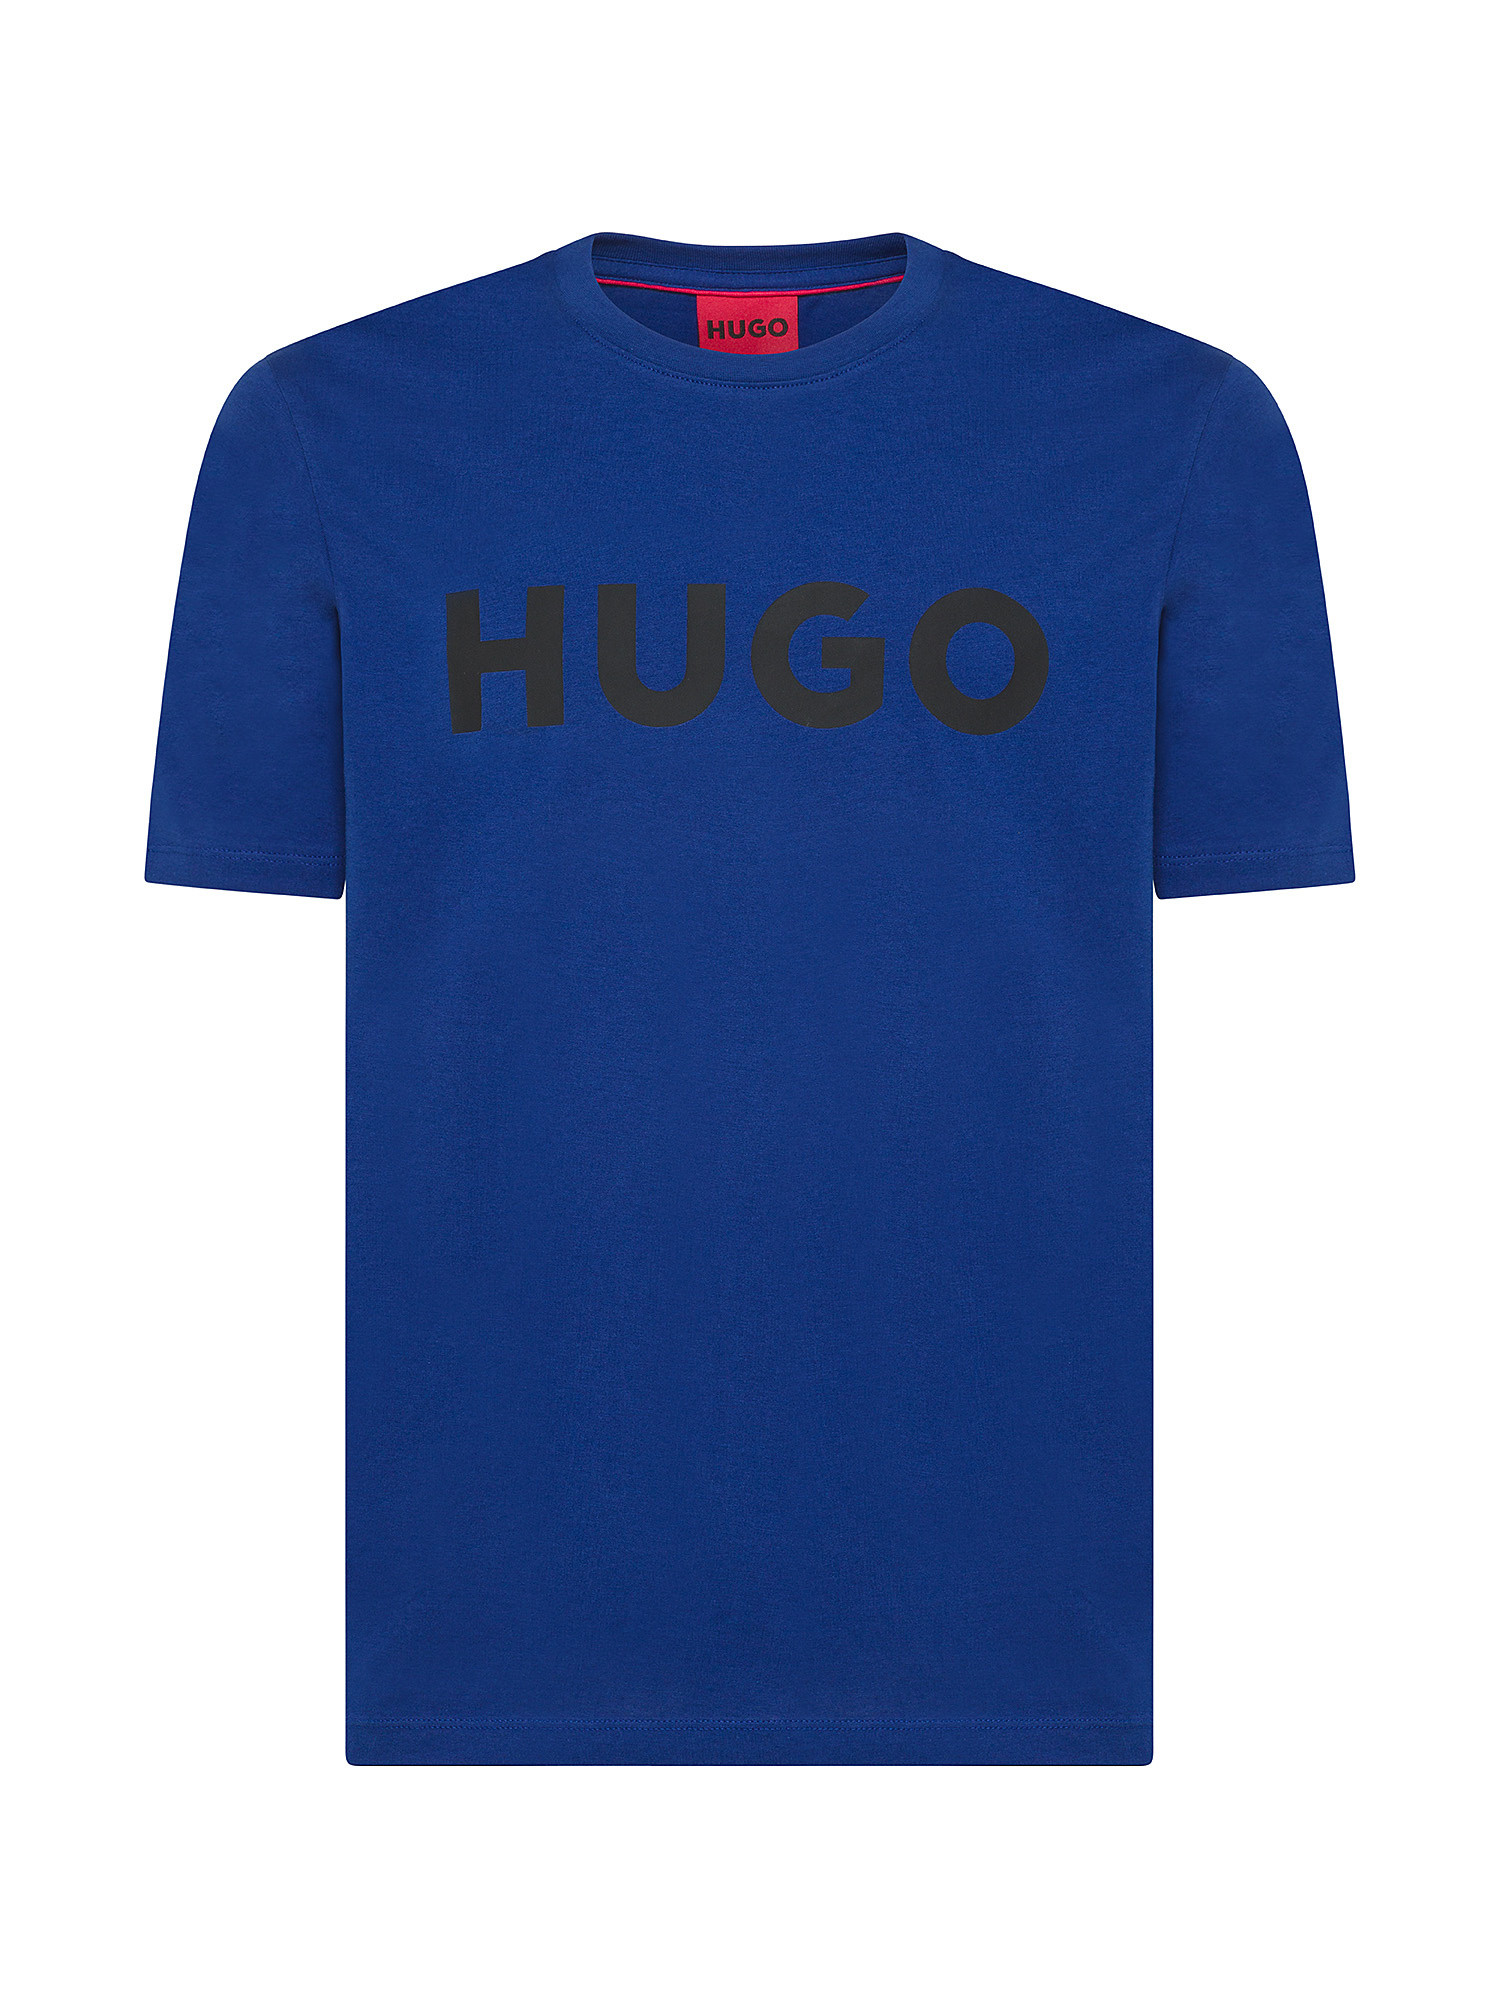 Hugo - T-shirt con logo in cotone, Blu royal, large image number 0